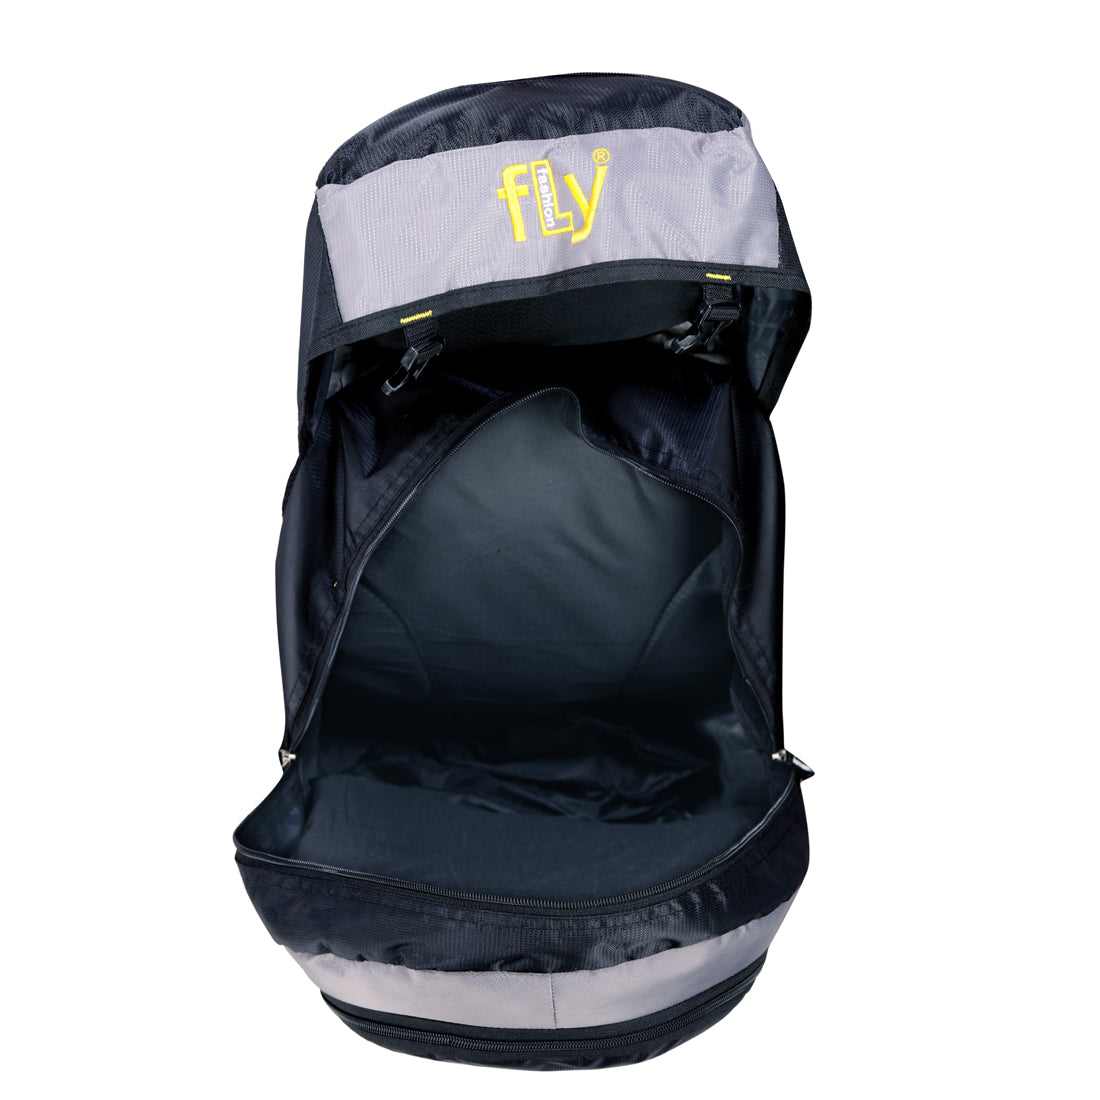 Adventure Backpack Trekking Hiking Travel Rucksack Bag With Shoe Compartments Rucksack - 55 L  (Grey)